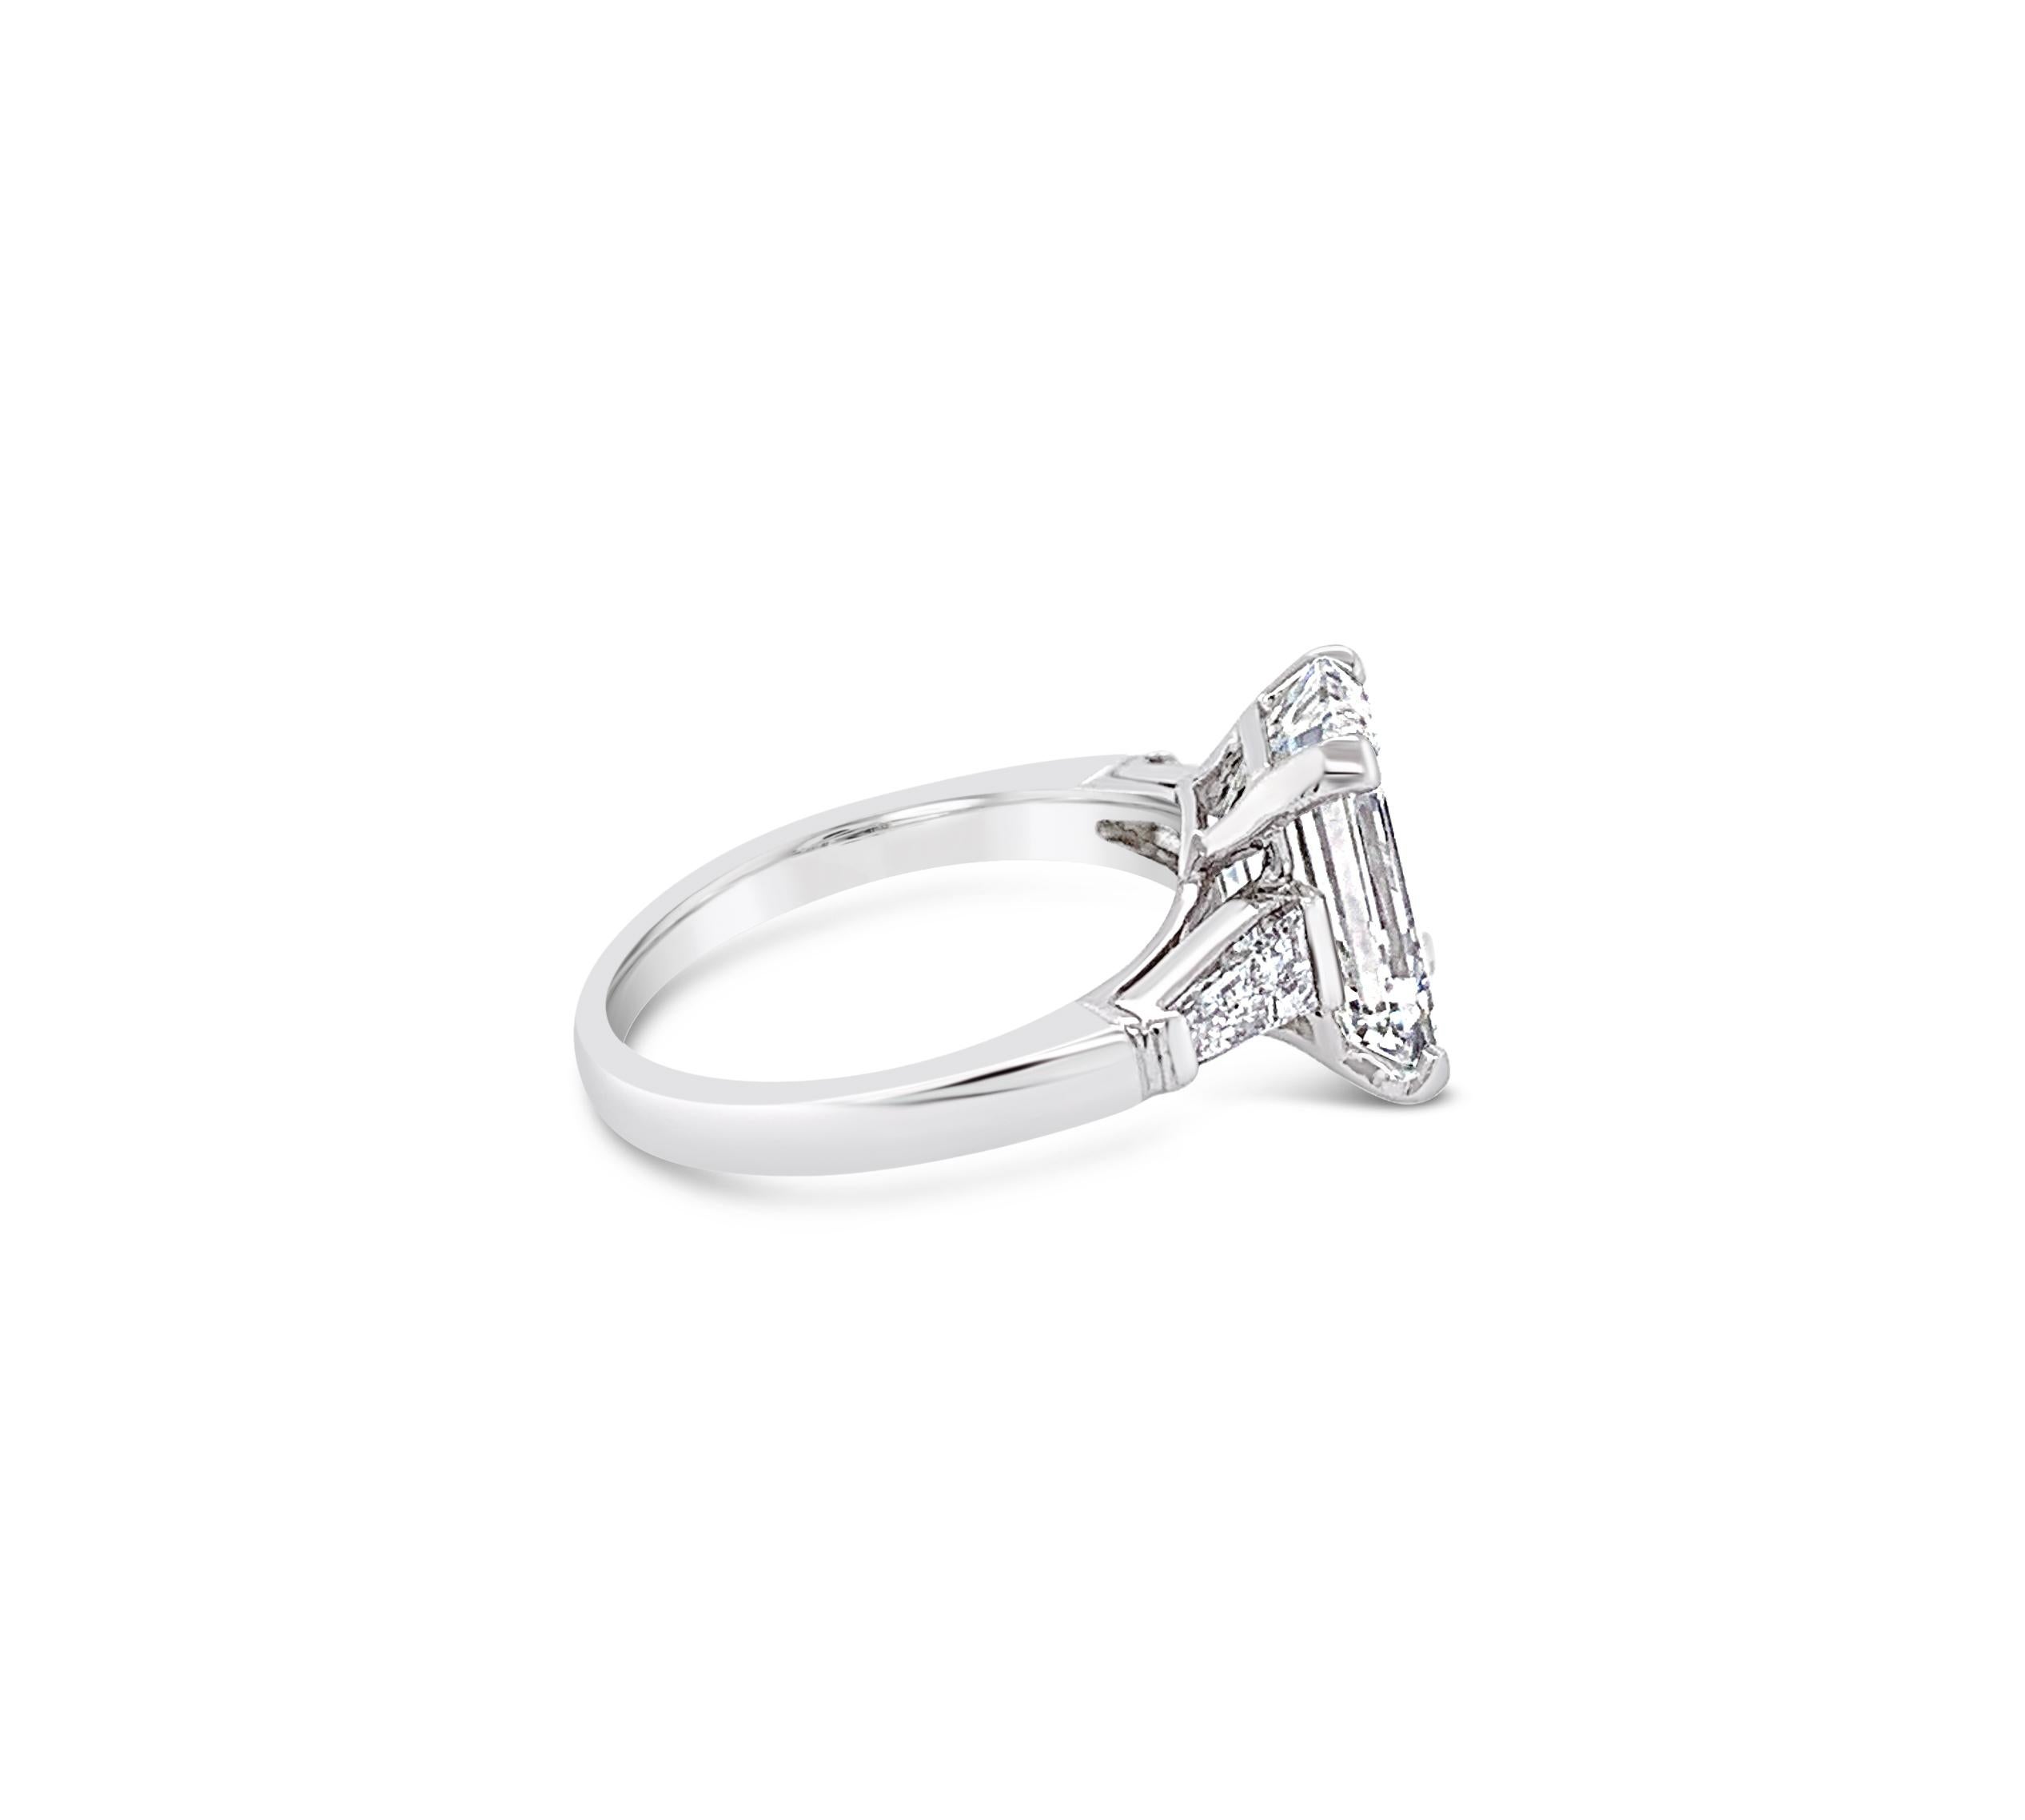 3.18 carat diamond ring